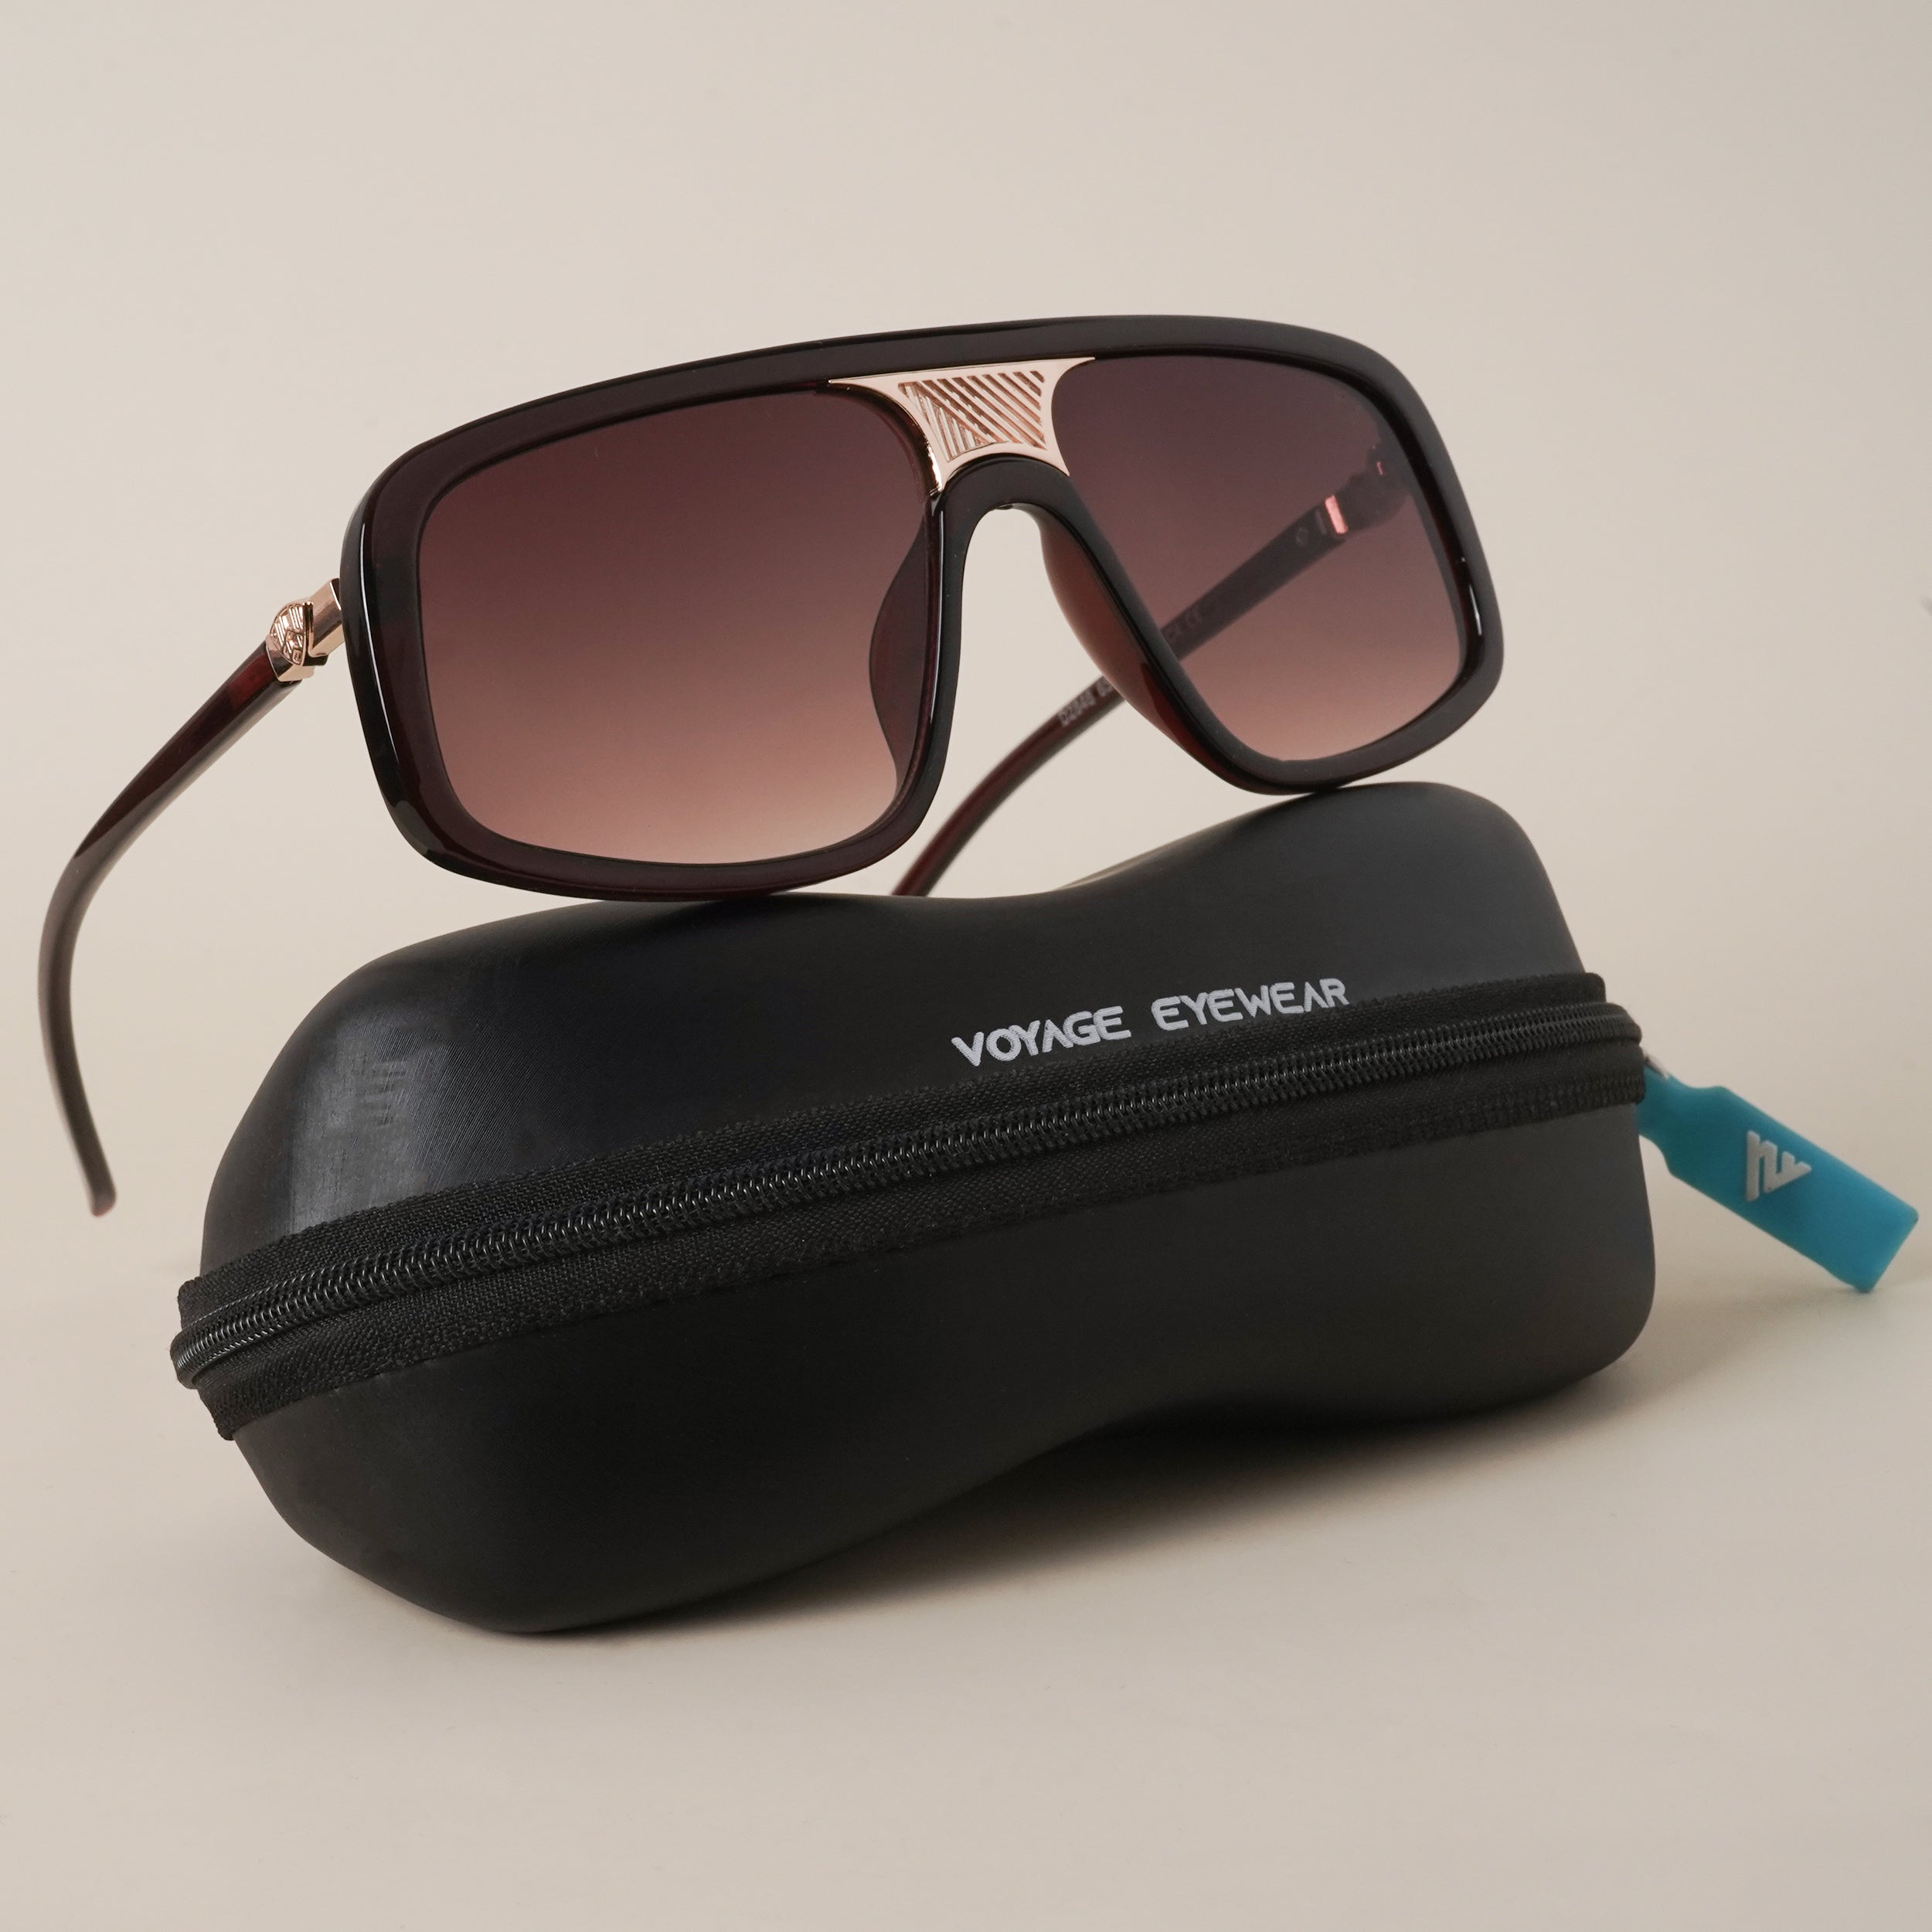 Voyage Brown Wayfarer Sunglasses for Men & Women - MG4017